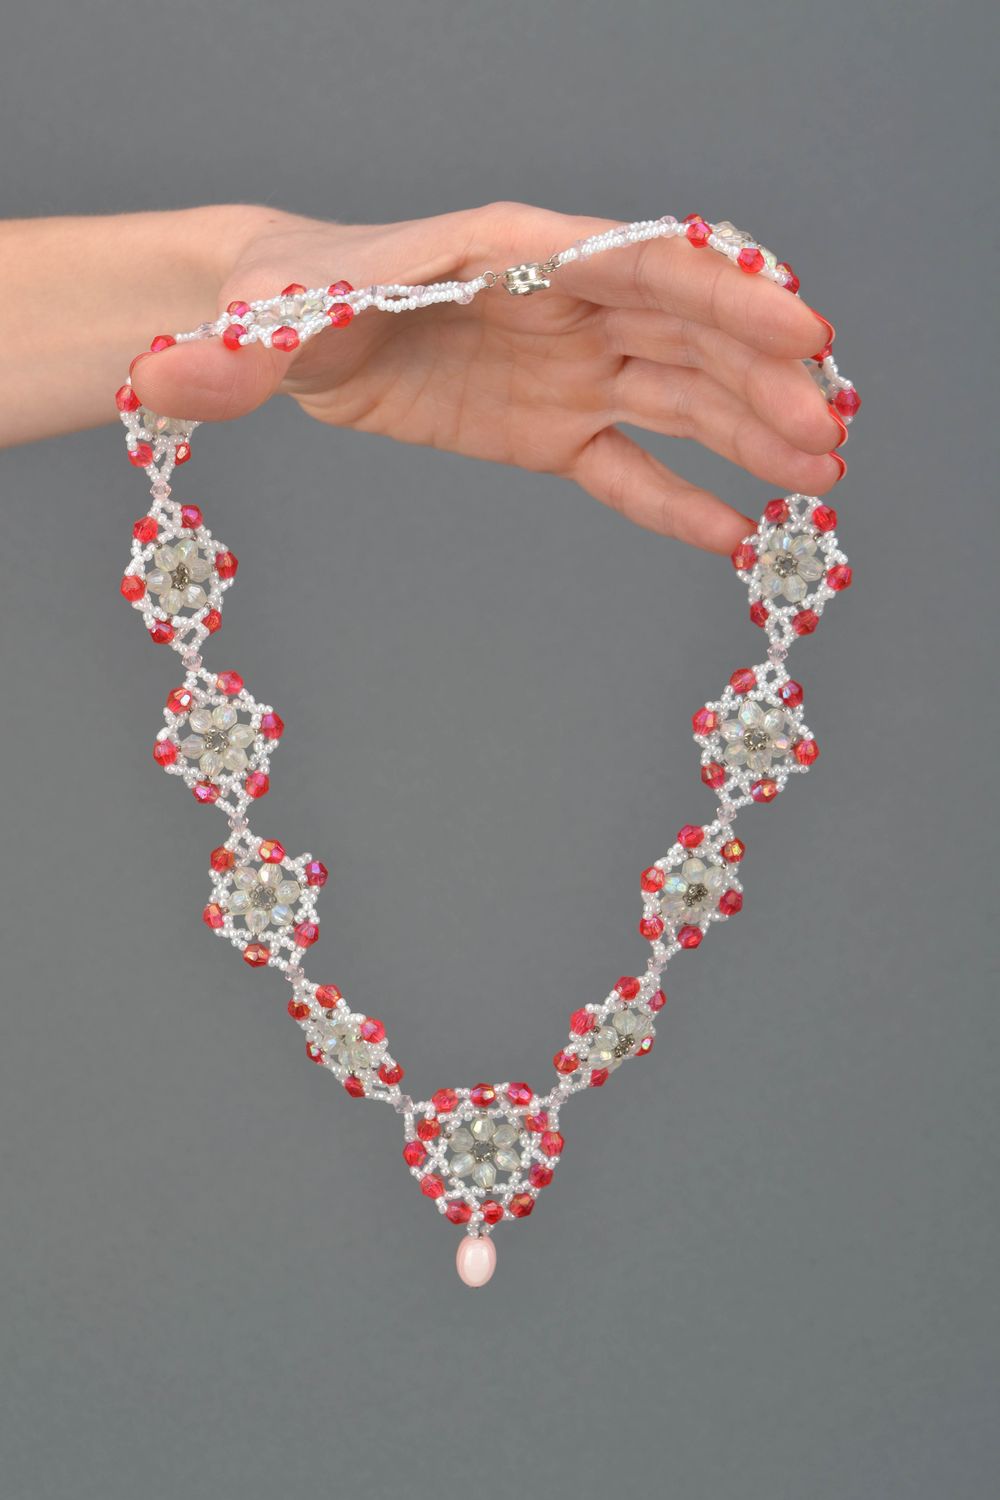 Handmade beaded necklace photo 4